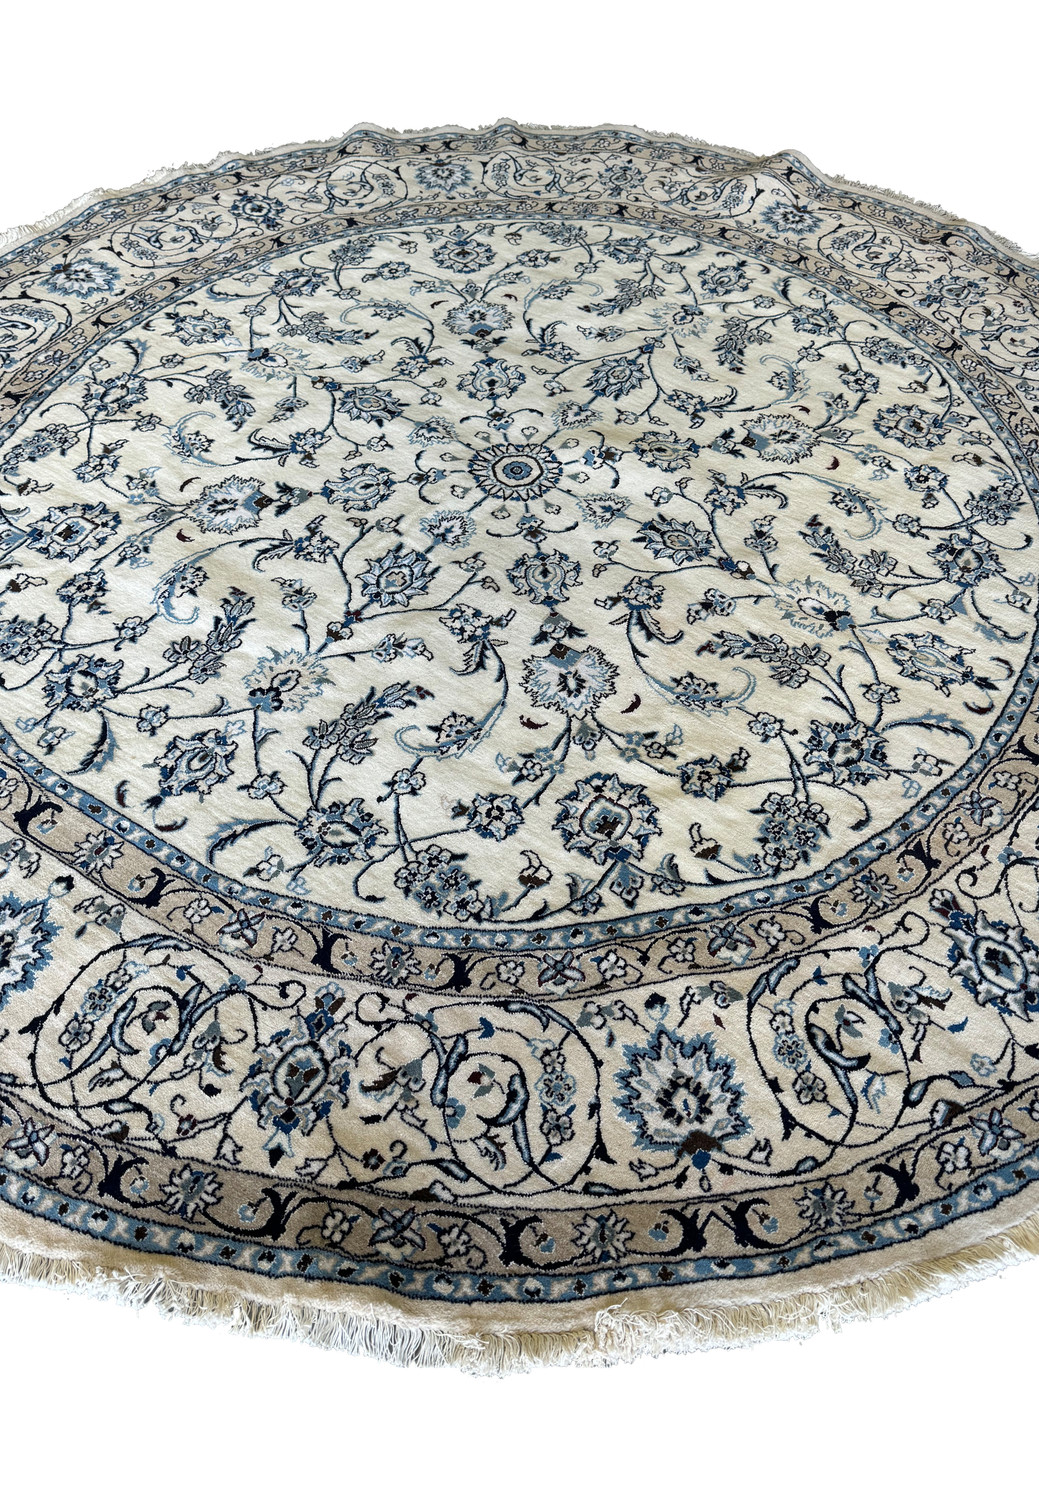 Full view of a round Persian Nain rug showcasing detailed border patterns